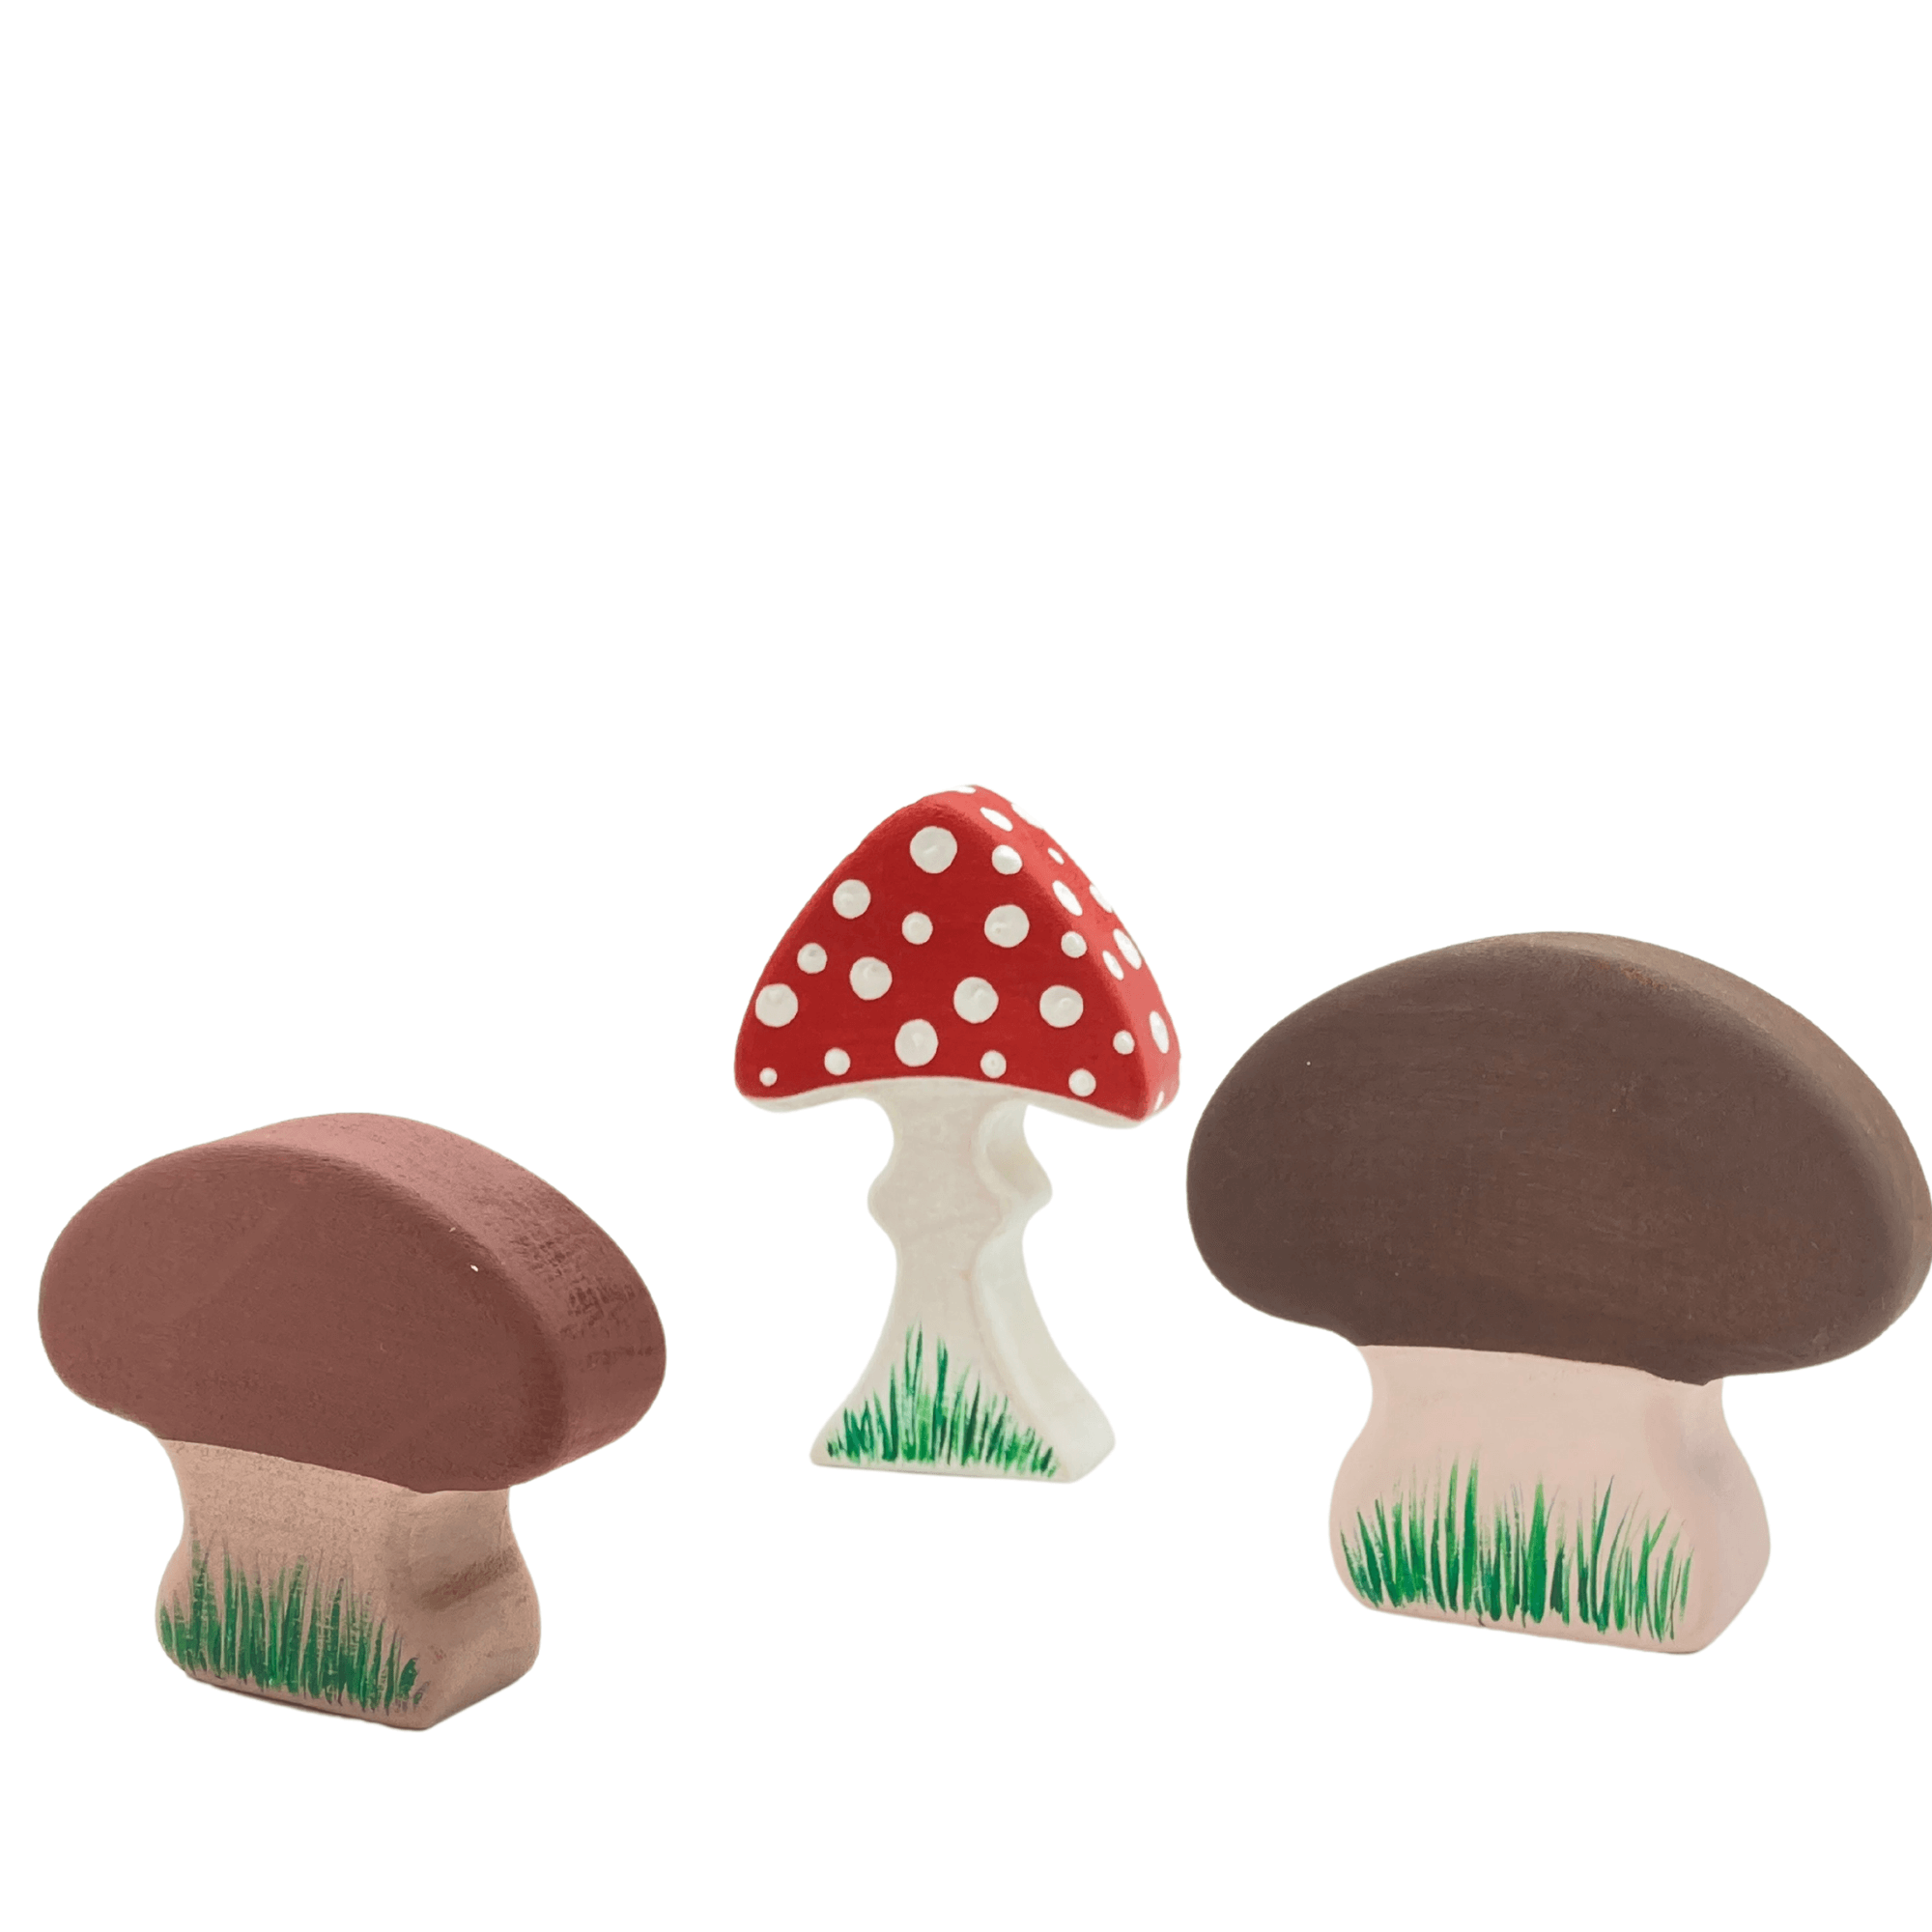 Forest Melody - Handmade Wooden Mushrooms